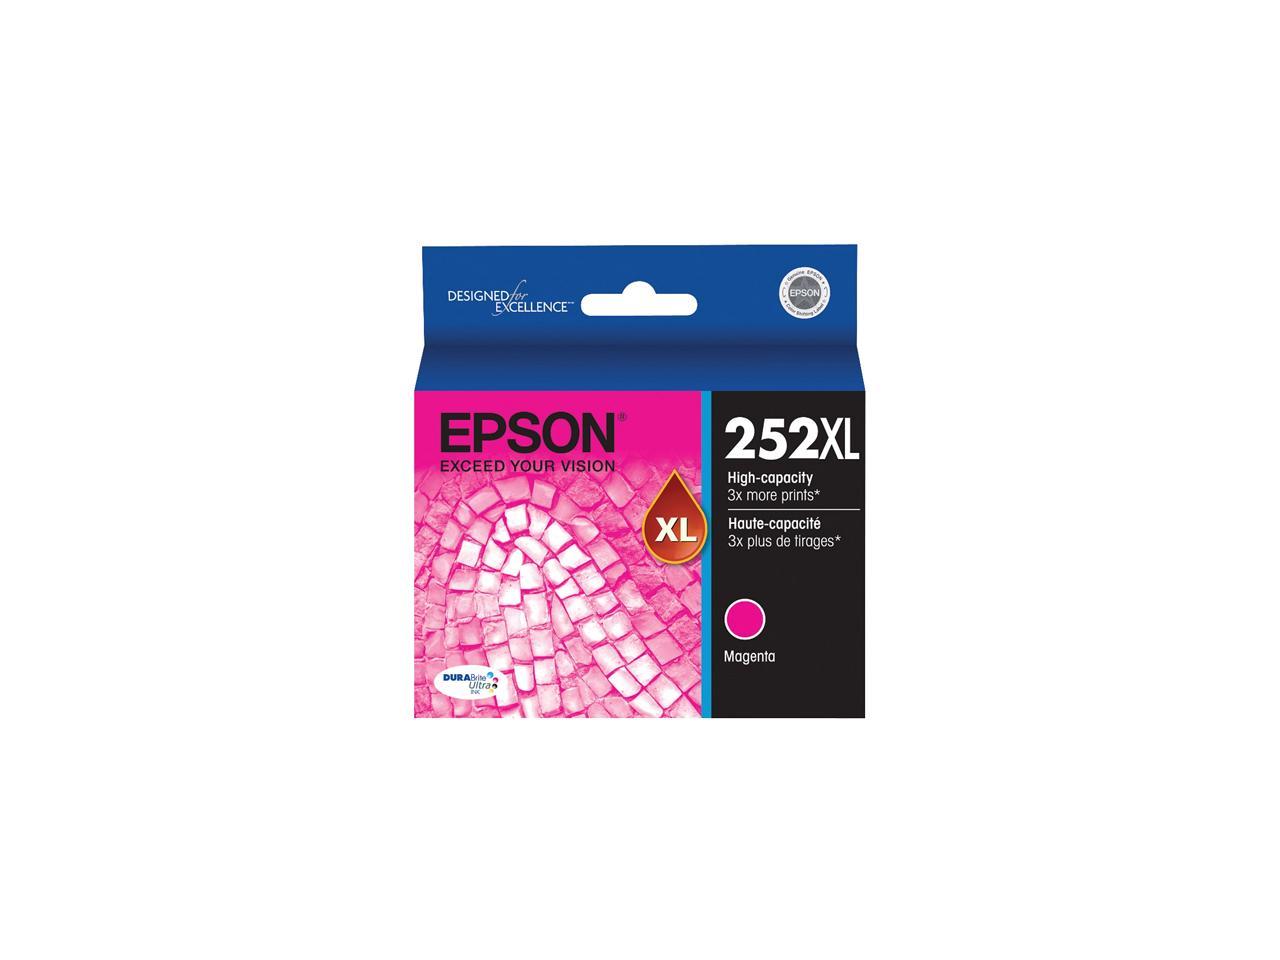 Epson 252xl Durabrite Ultra T252xl320 S High Capacity Ink Cartridge Magenta 4382